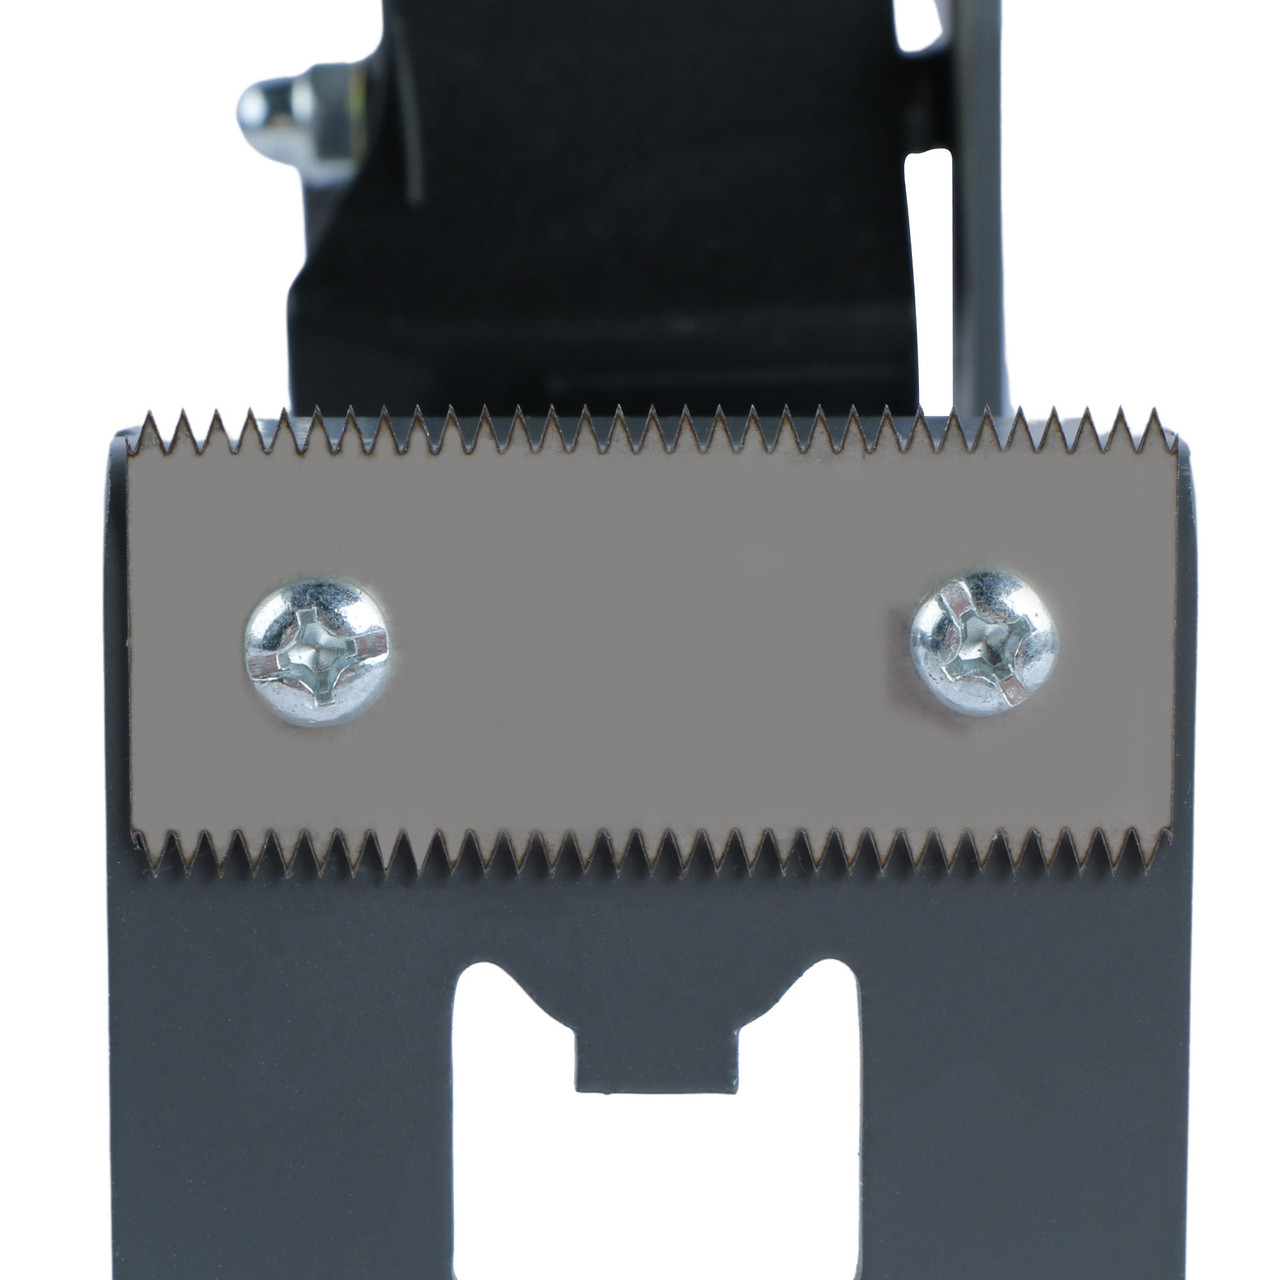 Tape Dispenser (3 Wide) – TDMC-3 - IndustriTAG by GA International